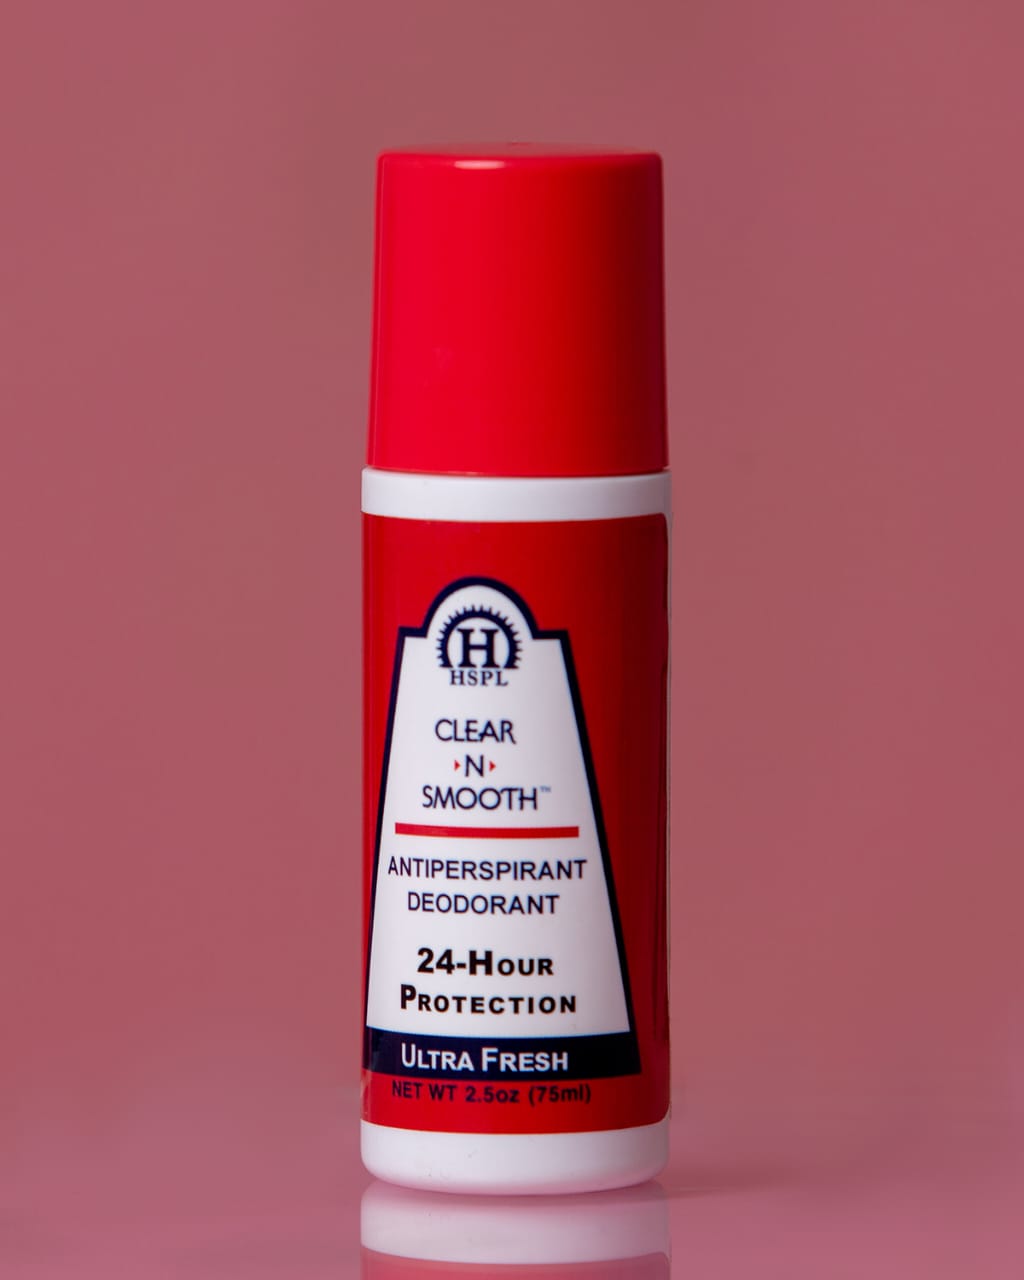 Clear-N-Smooth Deodorant Ultrafresh - Delight Supplies